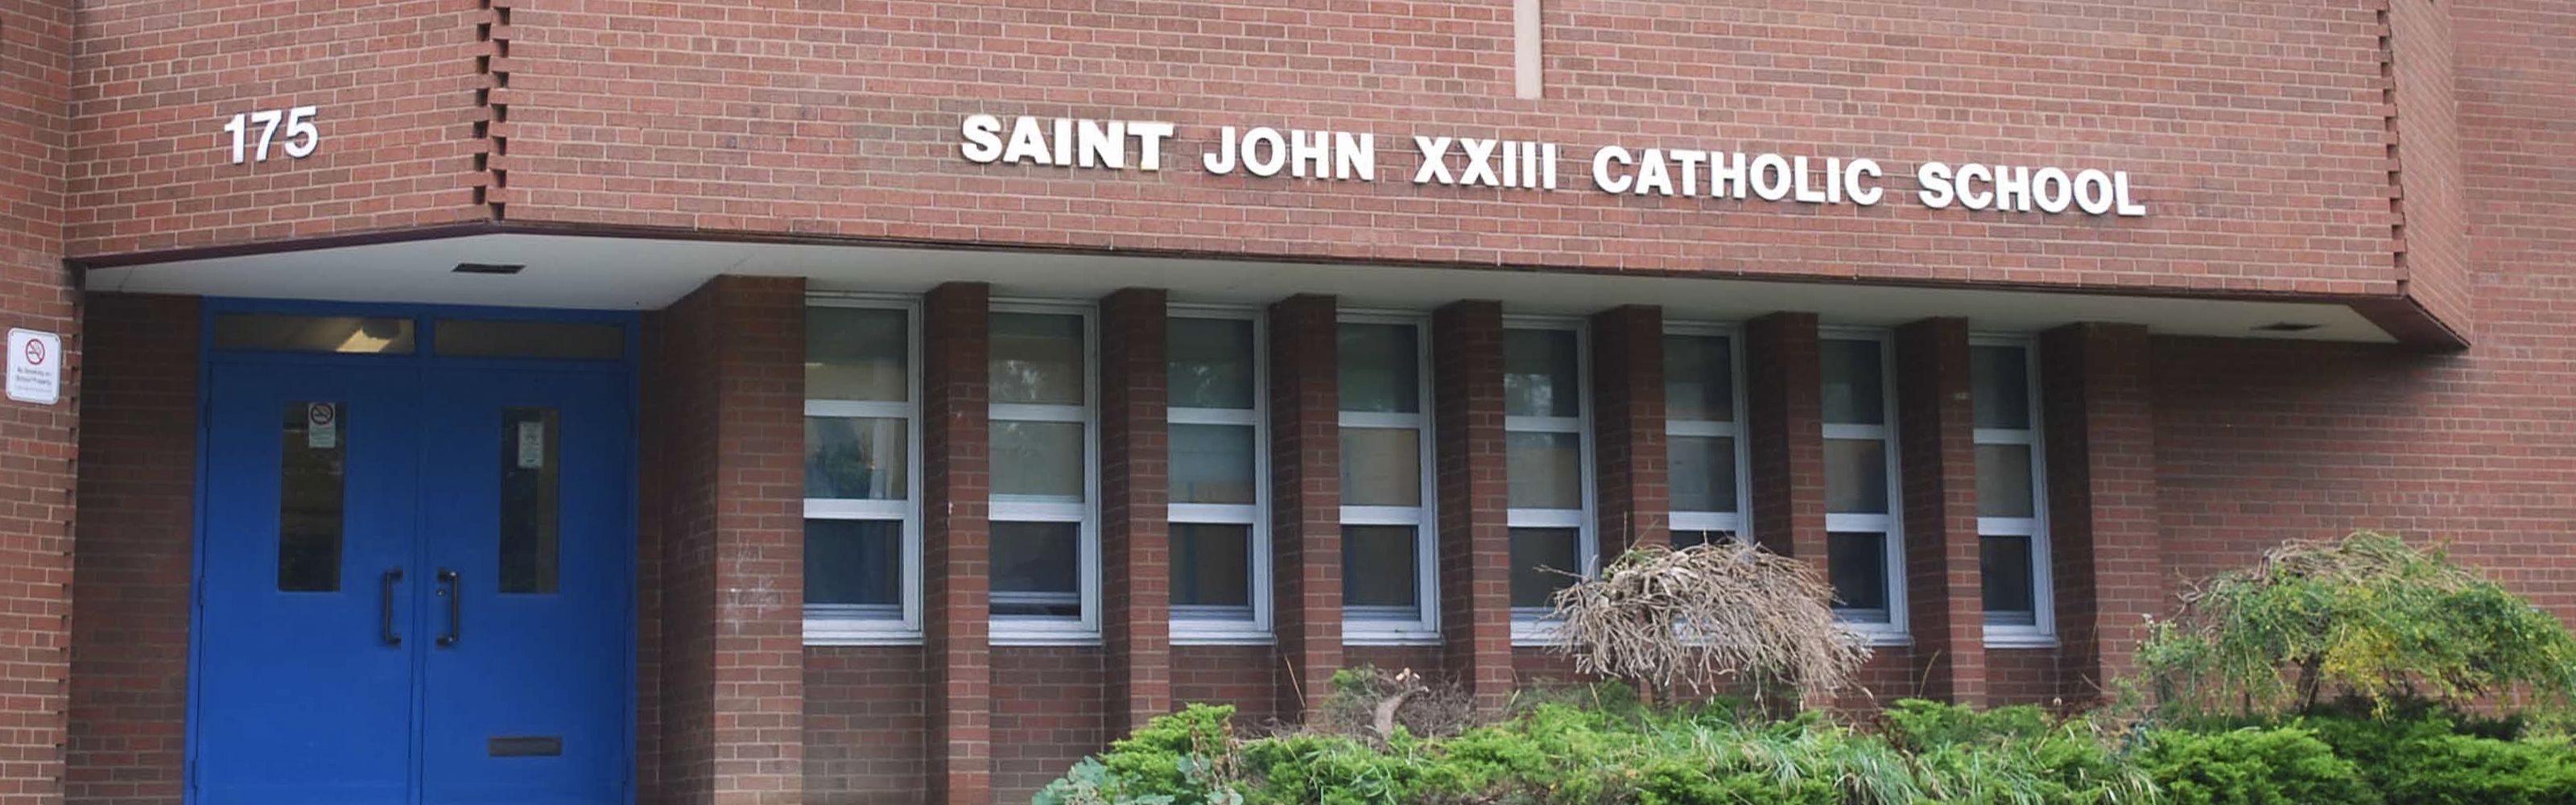 The front of the  St. John XXIII Catholic School building.